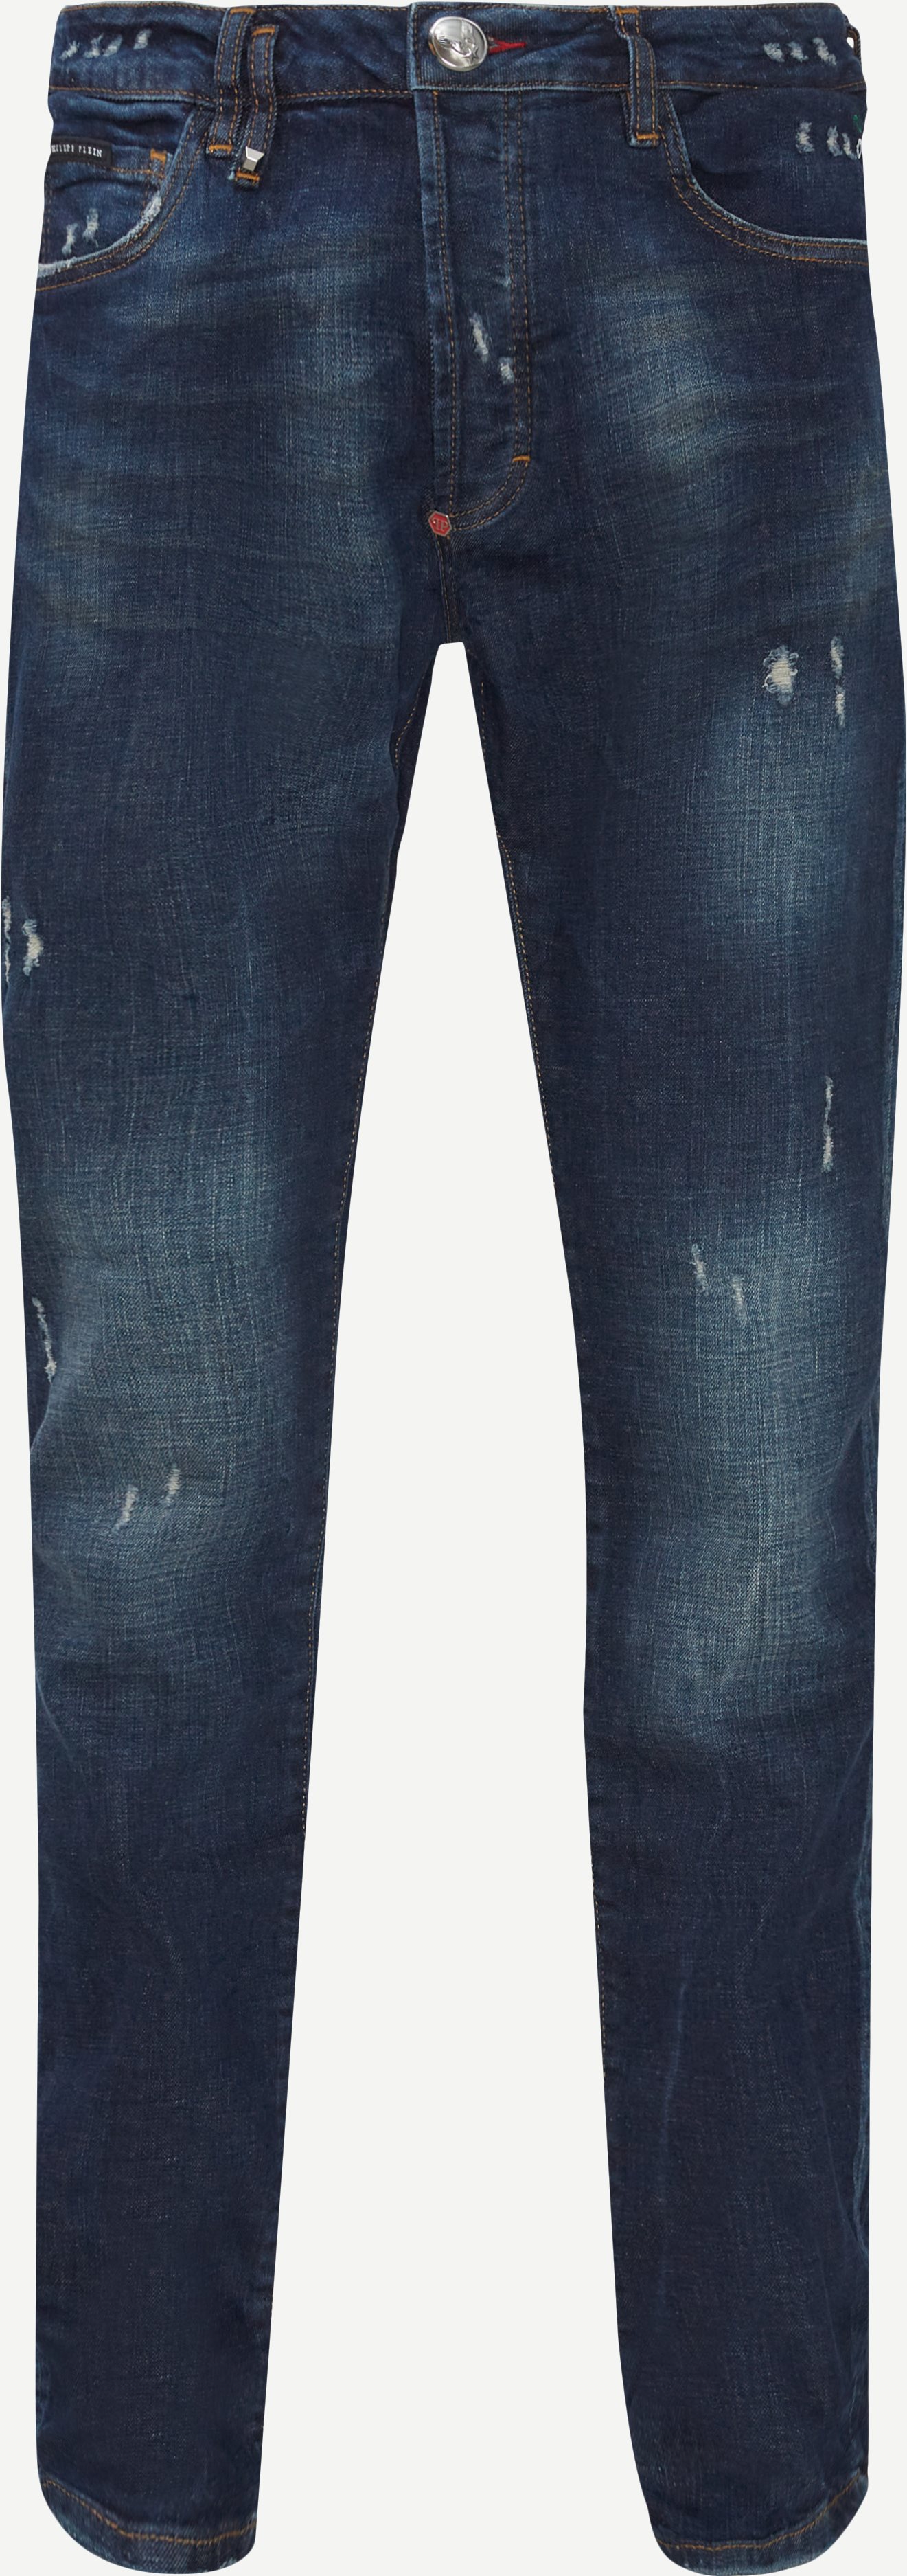 MDT2737 Super Straight Cut Jeans - Jeans - Straight fit - Denim